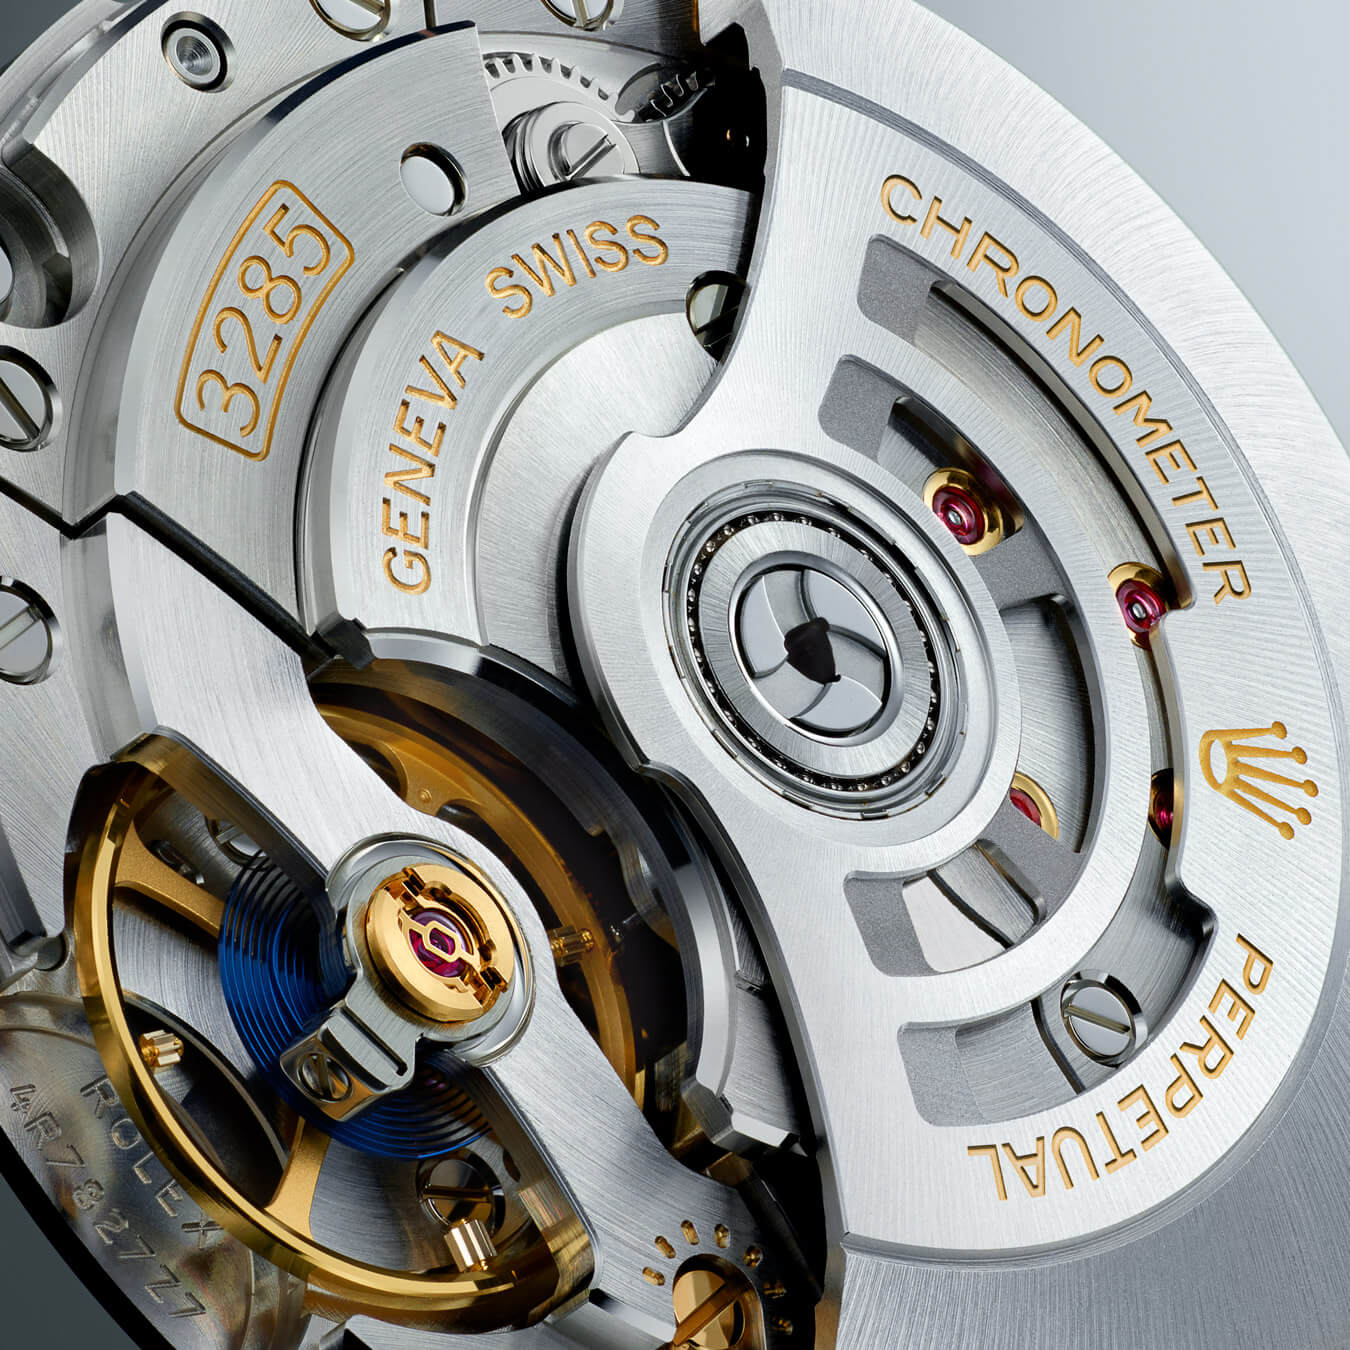 Rolex_GMT Master II_Cortina Watch